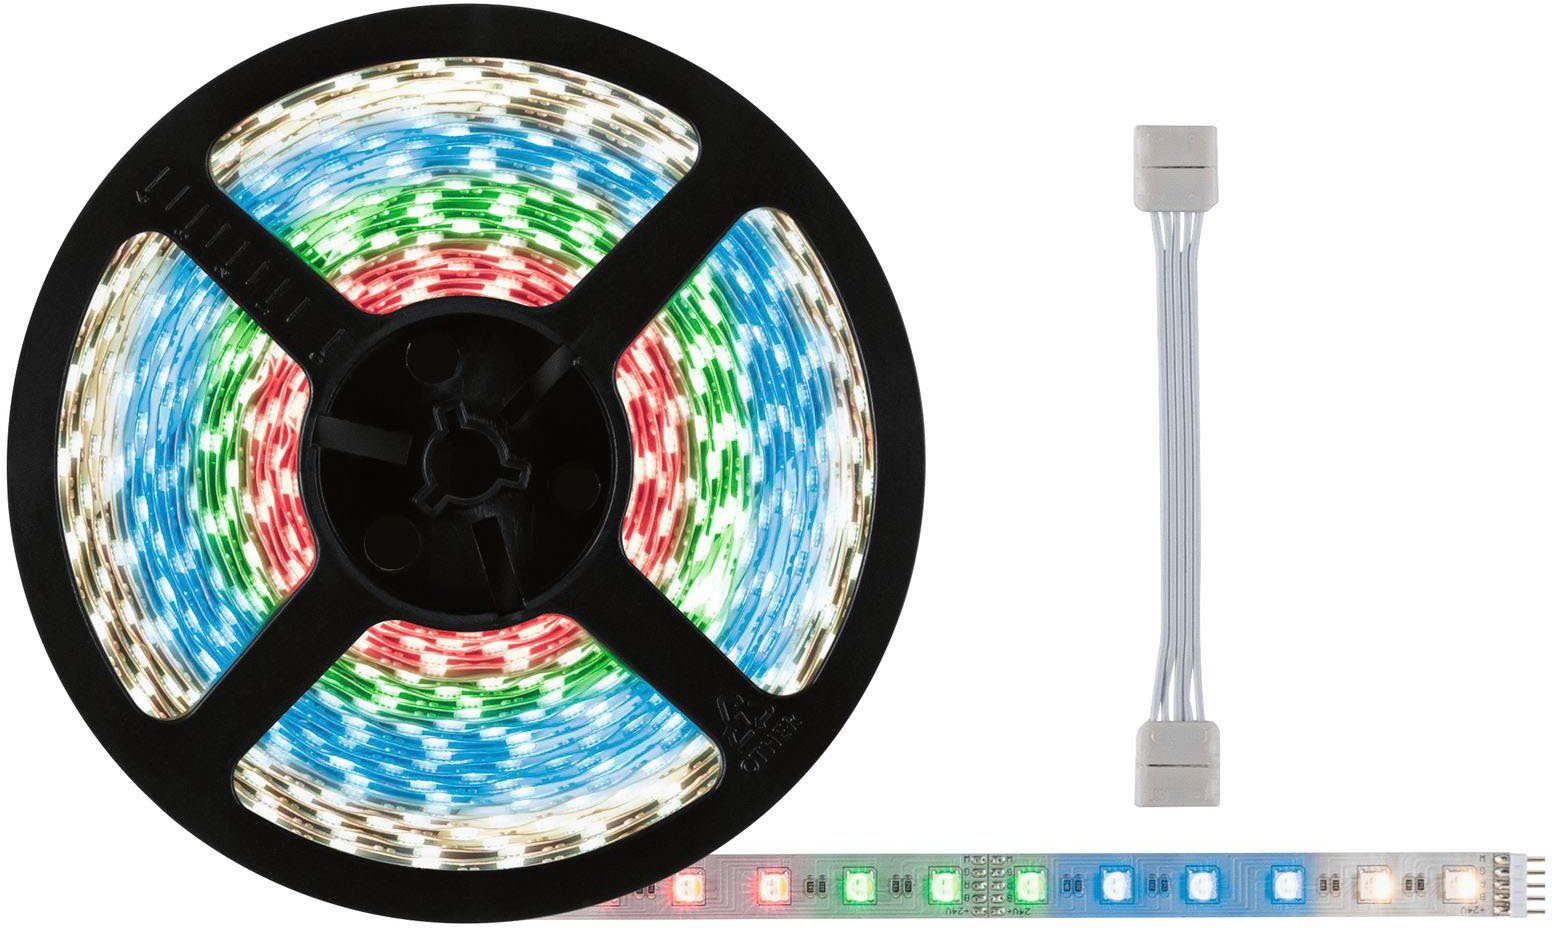 Paulmann LED-Streifen 10m MaxLED inkl. 1-flammig, 72W Adapterkabel RGBW+ 500lm/m, 500 Einzelstripe unbeschichtet